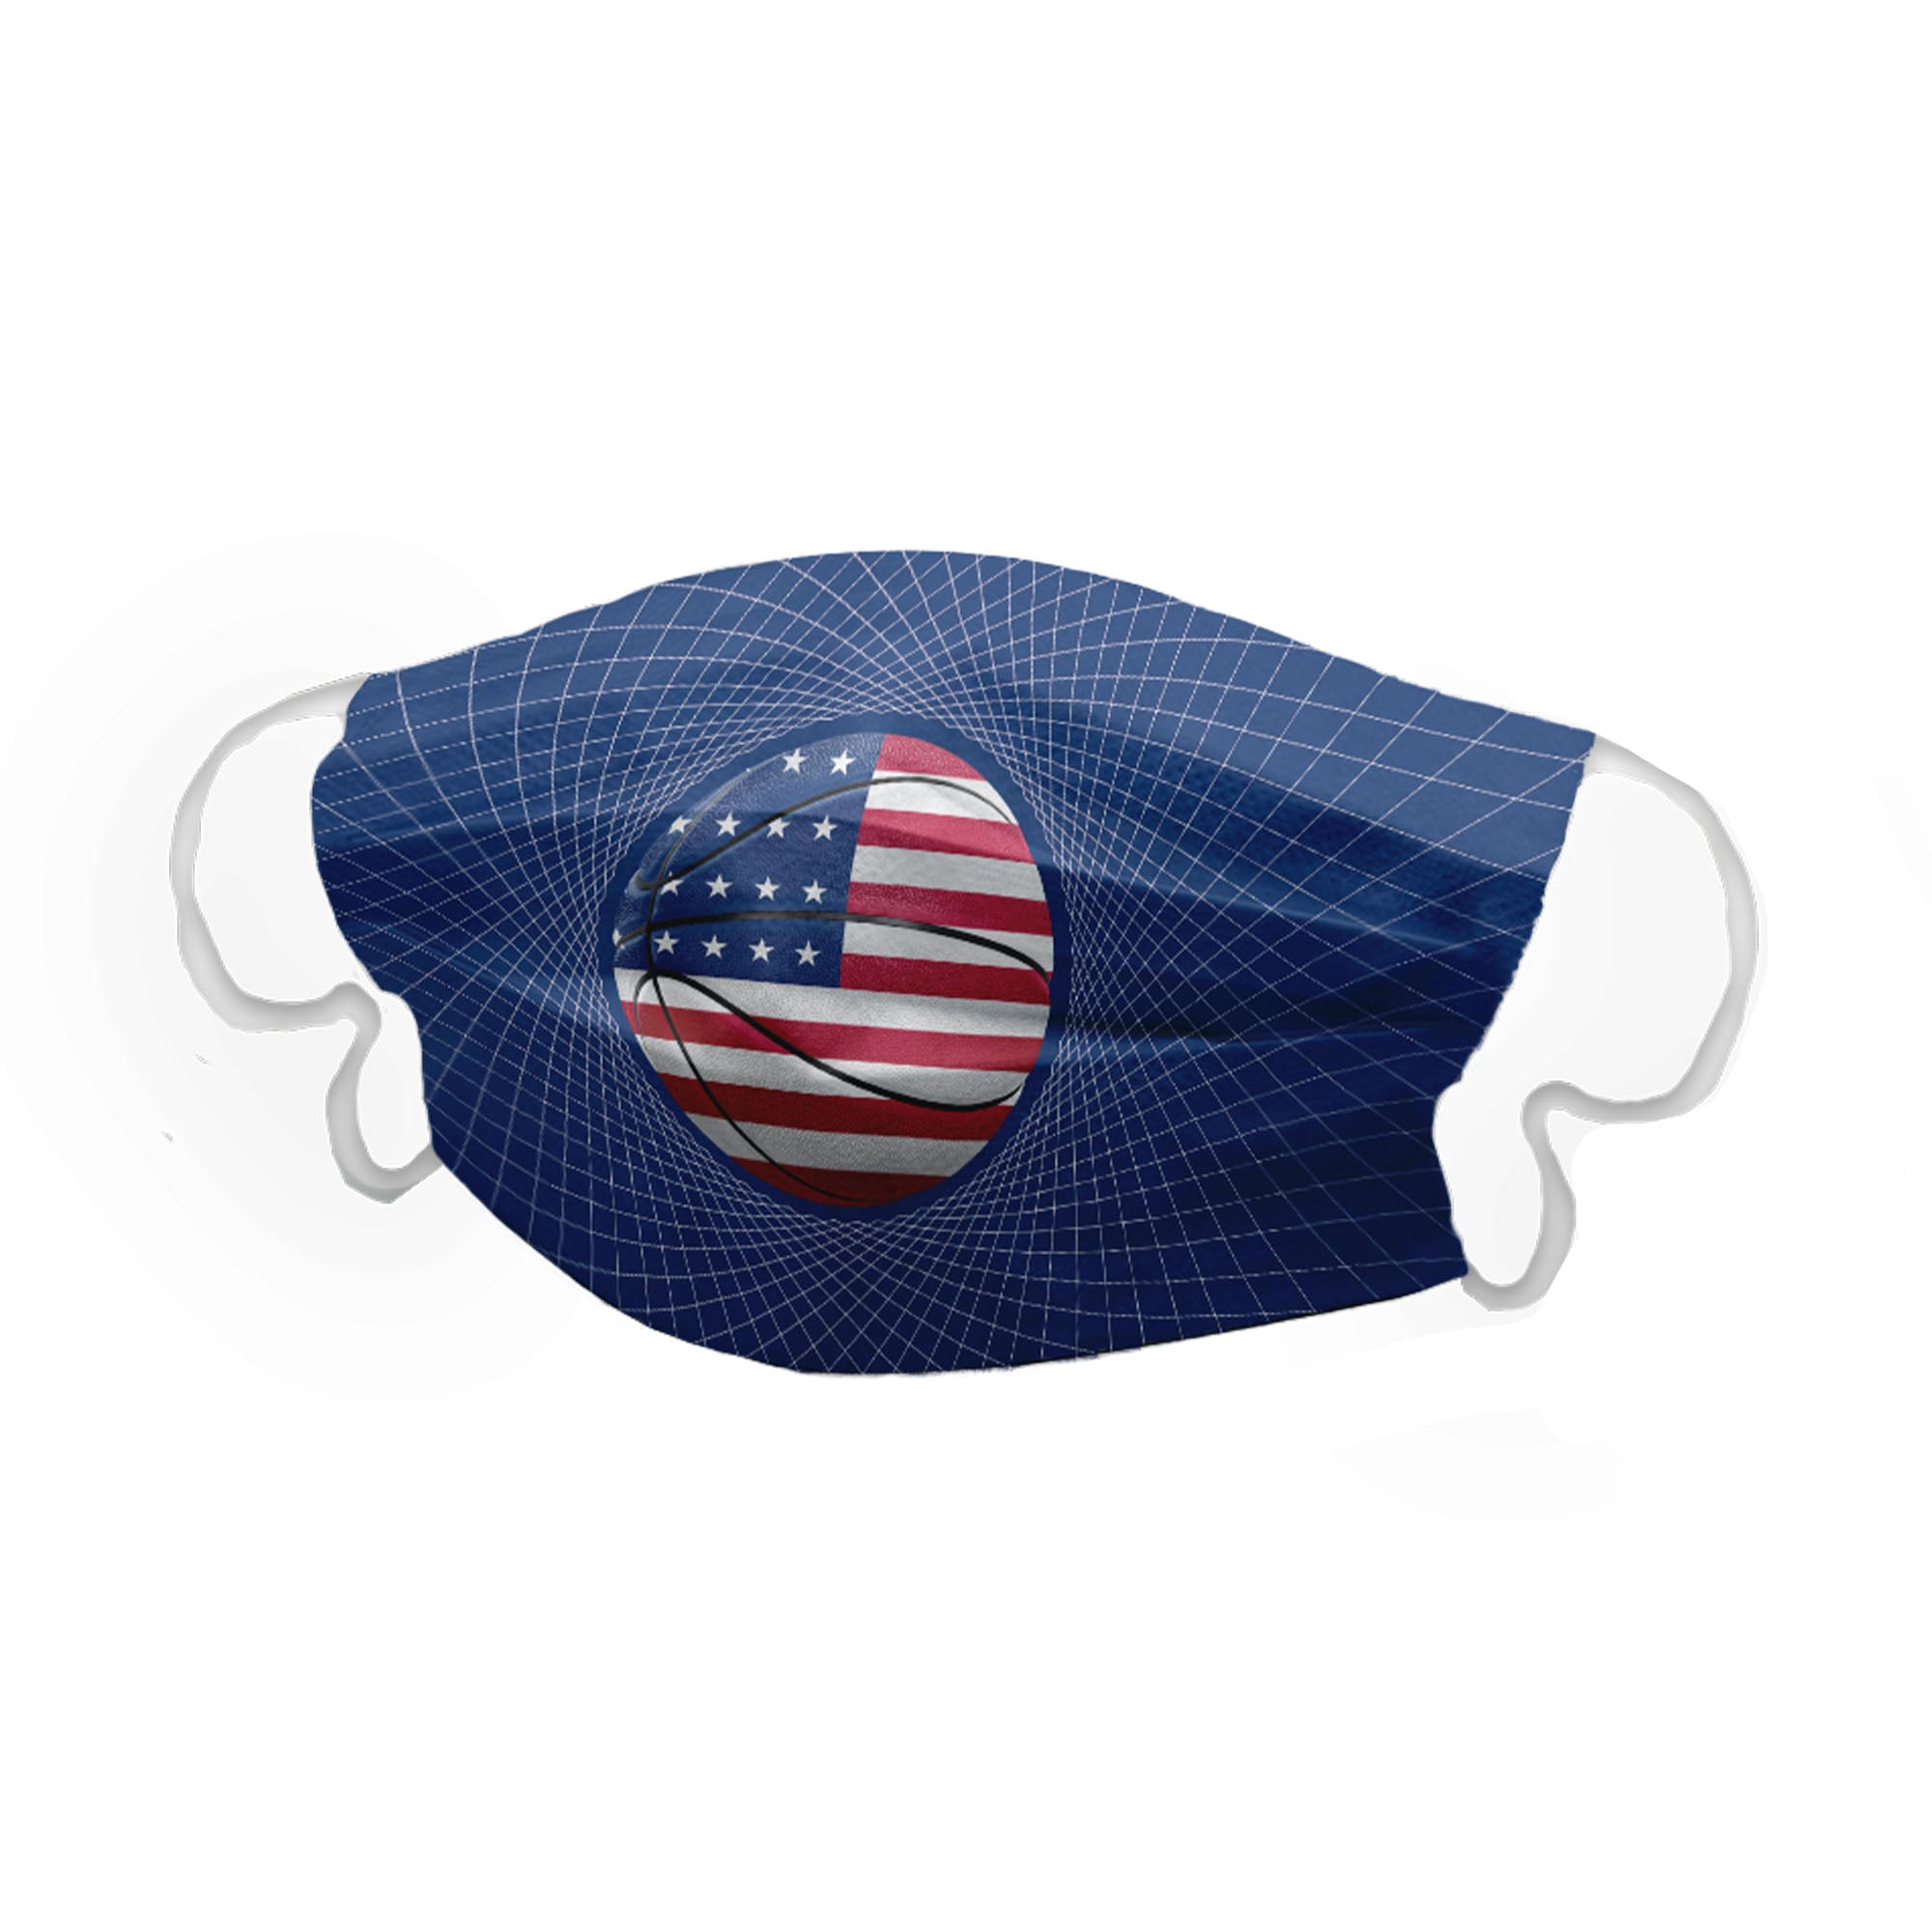 Hoopsbasket Custom Independence Day Mask 2